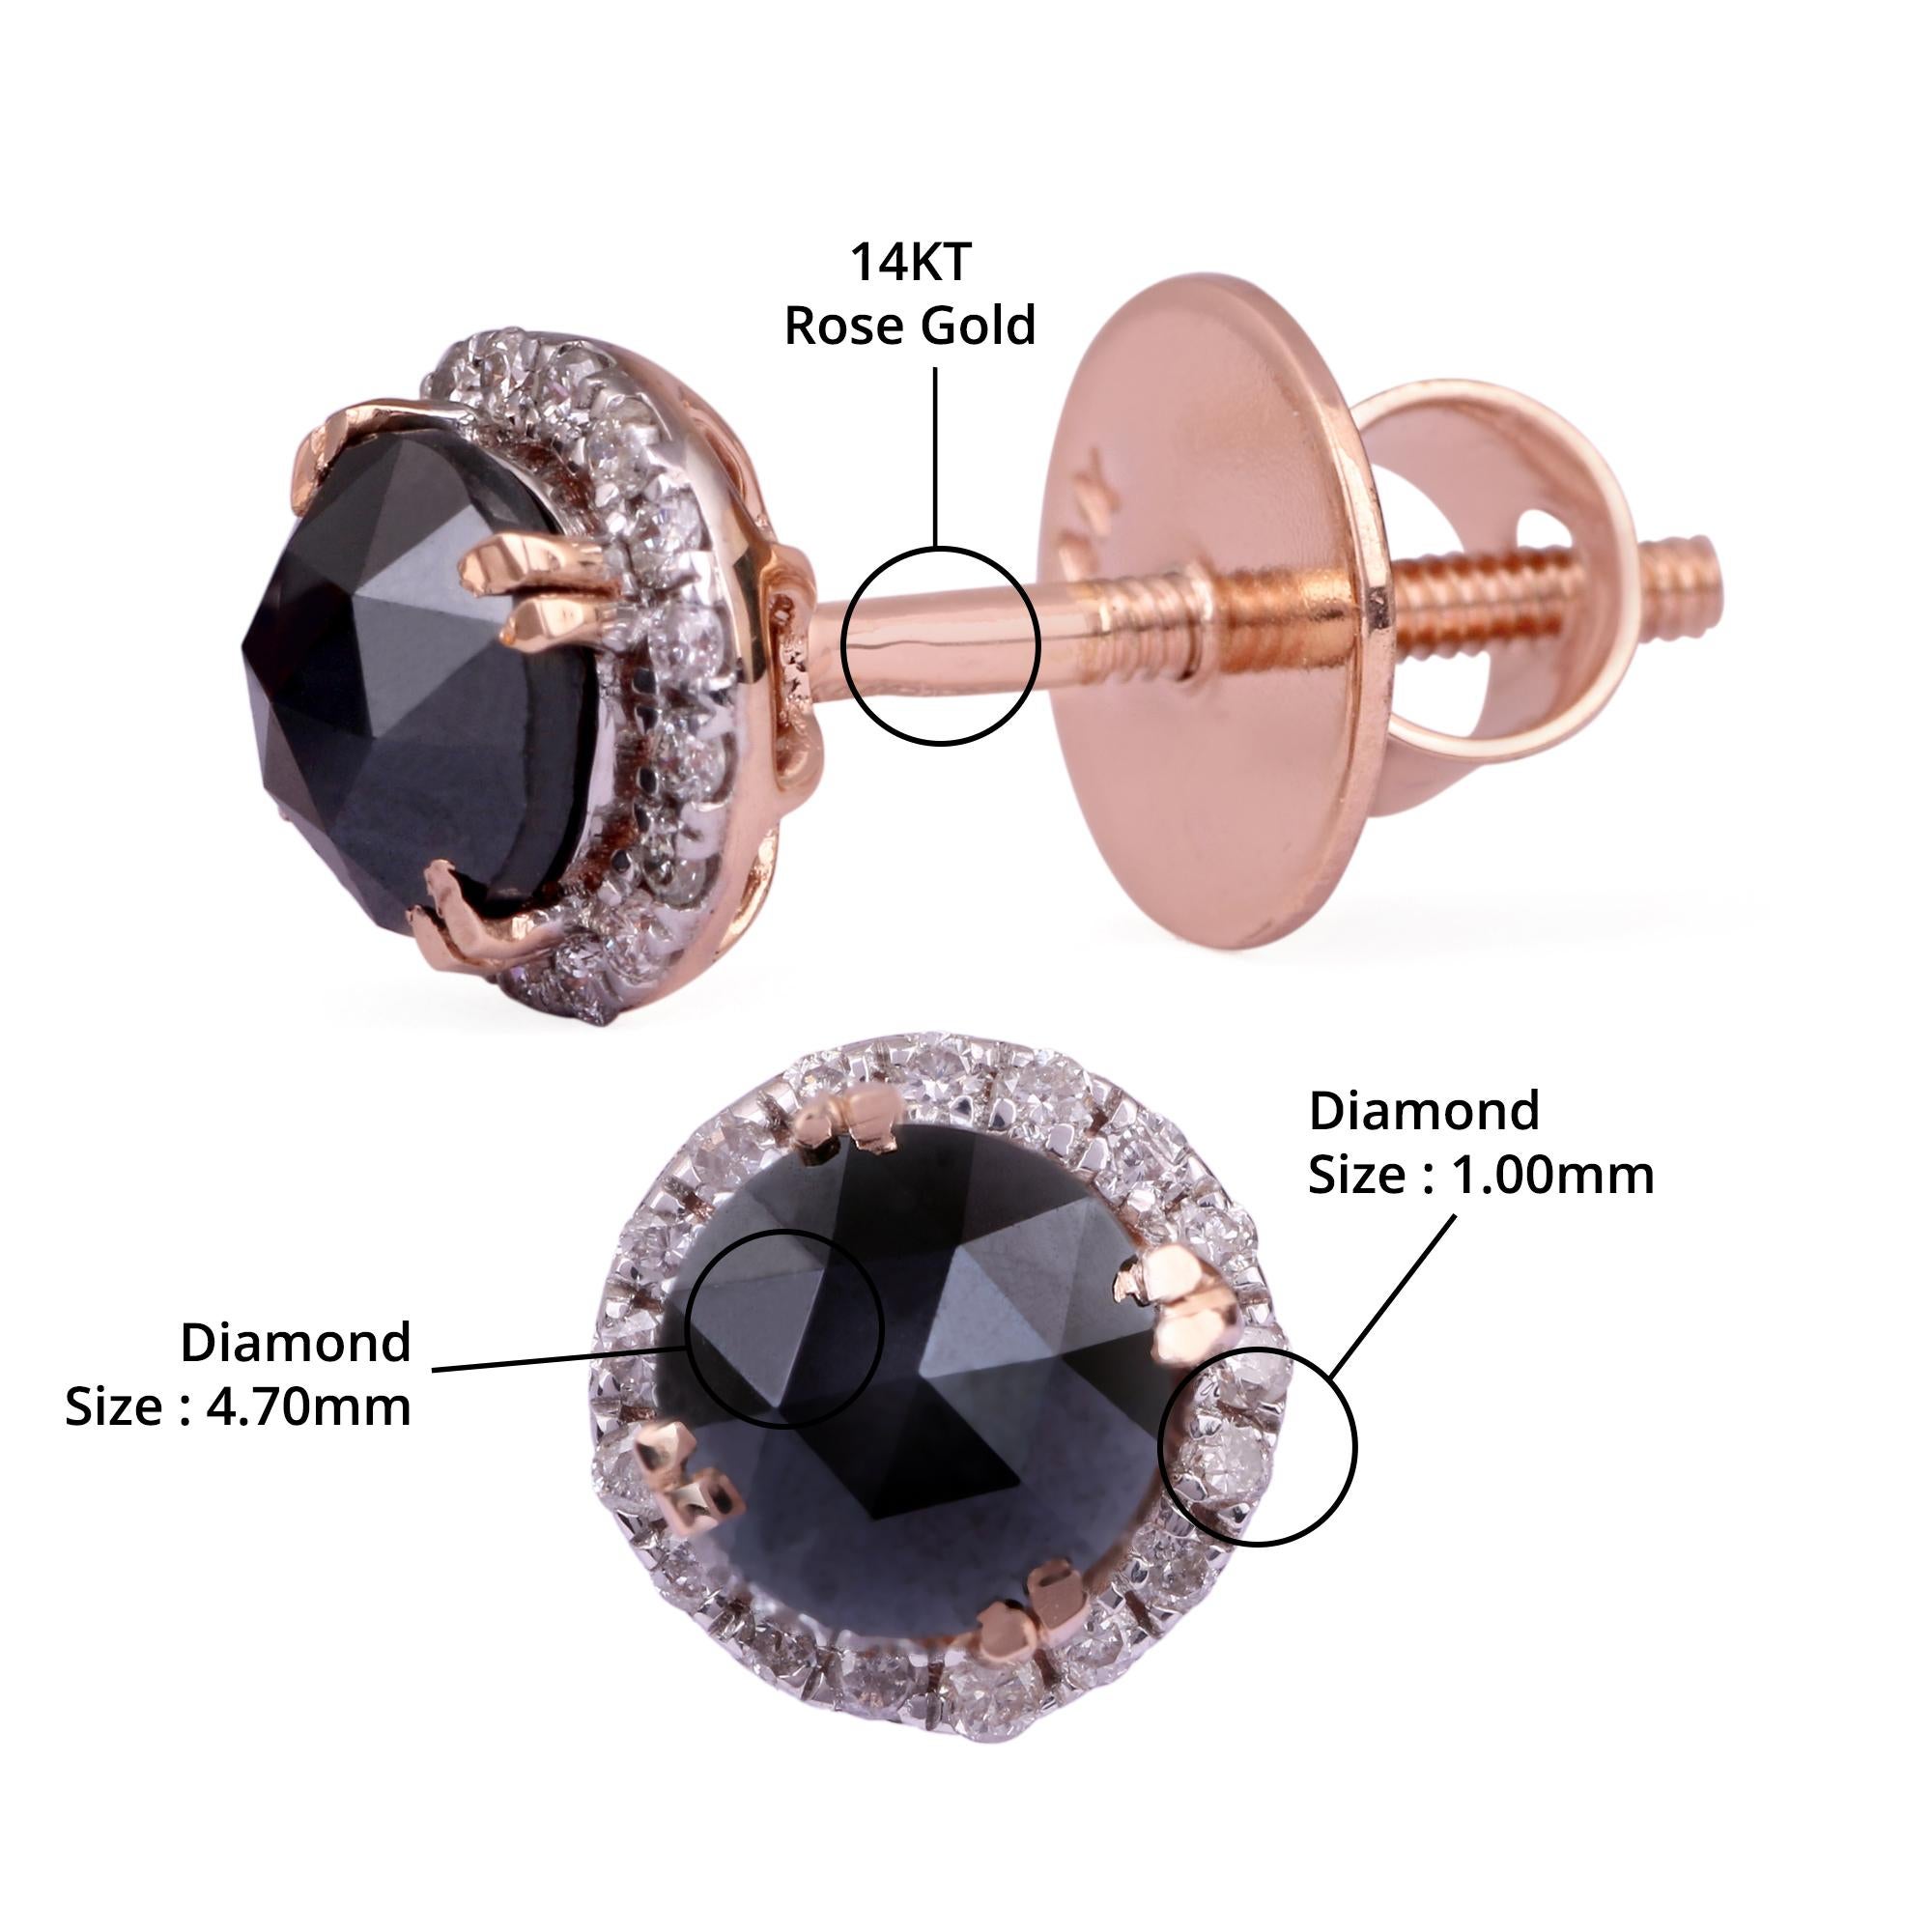 Item details:-

✦ SKU:- JER00721RRR

✦ Material :- Gold

✦ Metal Purity : 14K Rose Gold 

✦ Gemstone Specification:-
✧ Clear Diamond (l1/HI) Round - 1mm - 34 Pcs
✧ Real Black Diamond - 6.50mm - 2 Pcs


✦ Approx. Diamond Carat Weight : 0.167 Carat
✦